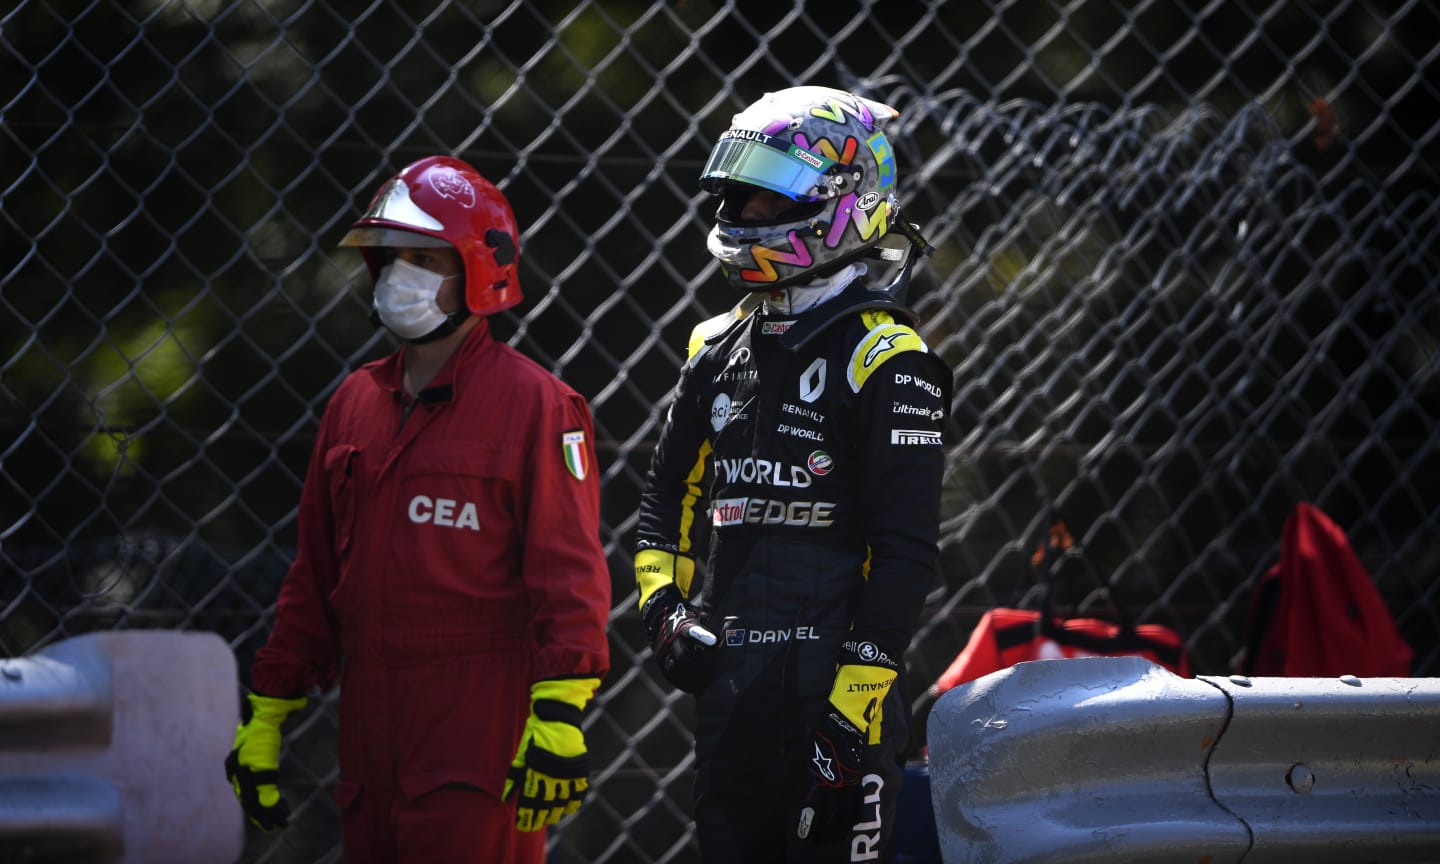 MONZA, ITALY - SEPTEMBER 05: Daniel Ricciardo of Australia and Renault Sport F1 walks along the